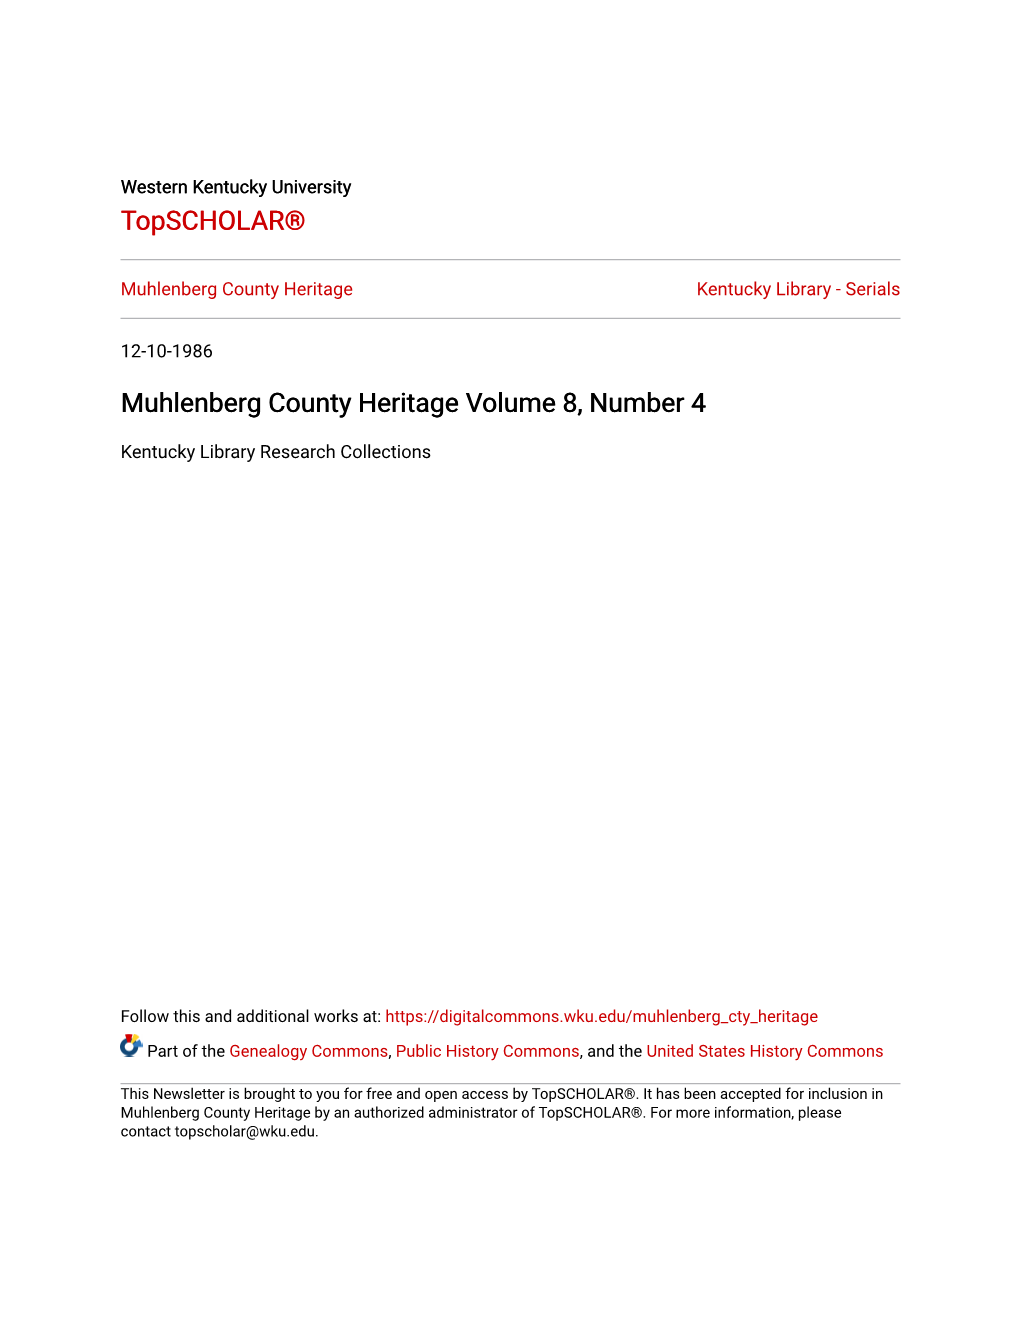 Muhlenberg County Heritage Volume 8, Number 4